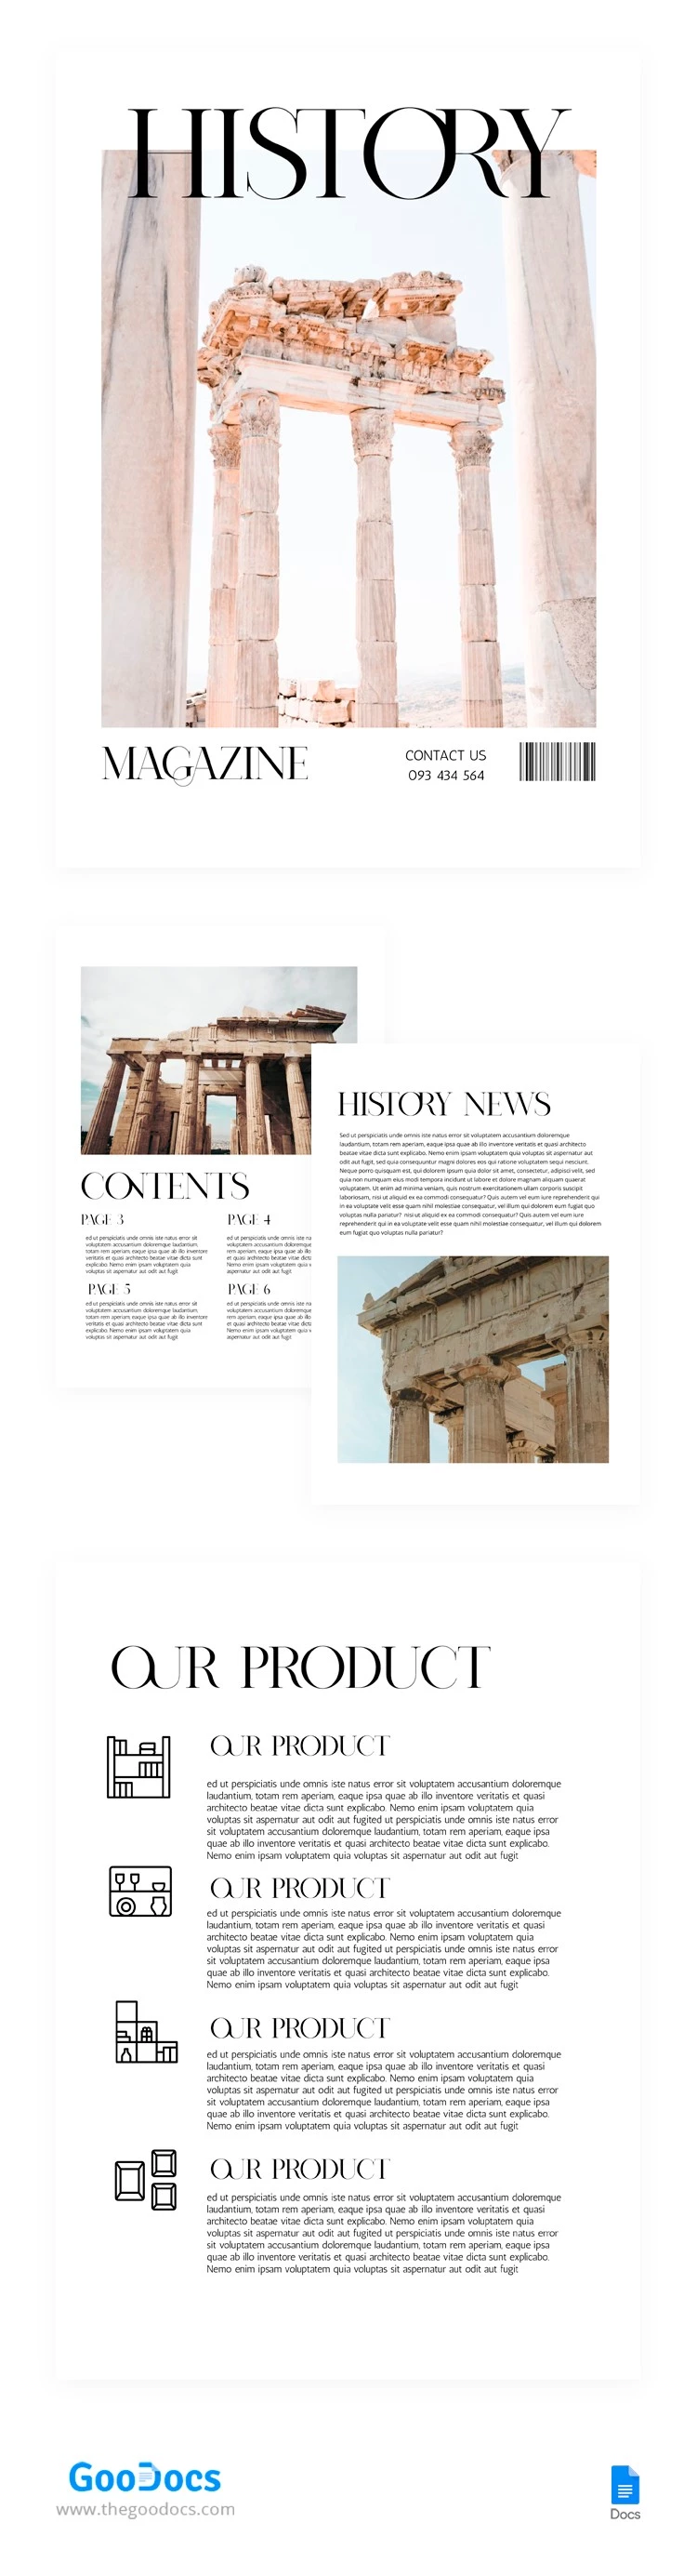 Le magazine d'histoire minimaliste - free Google Docs Template - 10066012